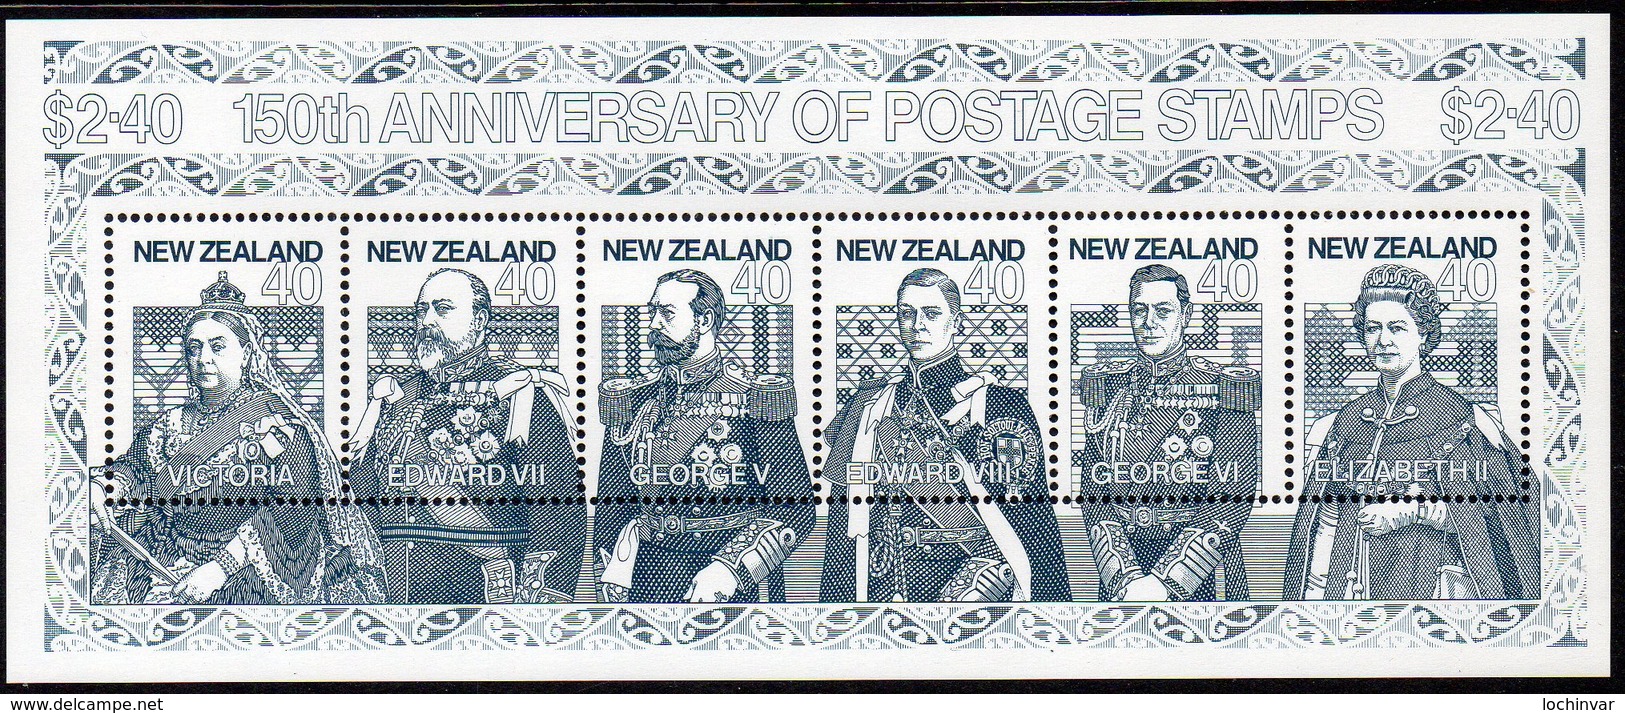 NEW ZEALAND, 1990 STAMP ANNIVERSARY MINISHEET MNH - Unused Stamps